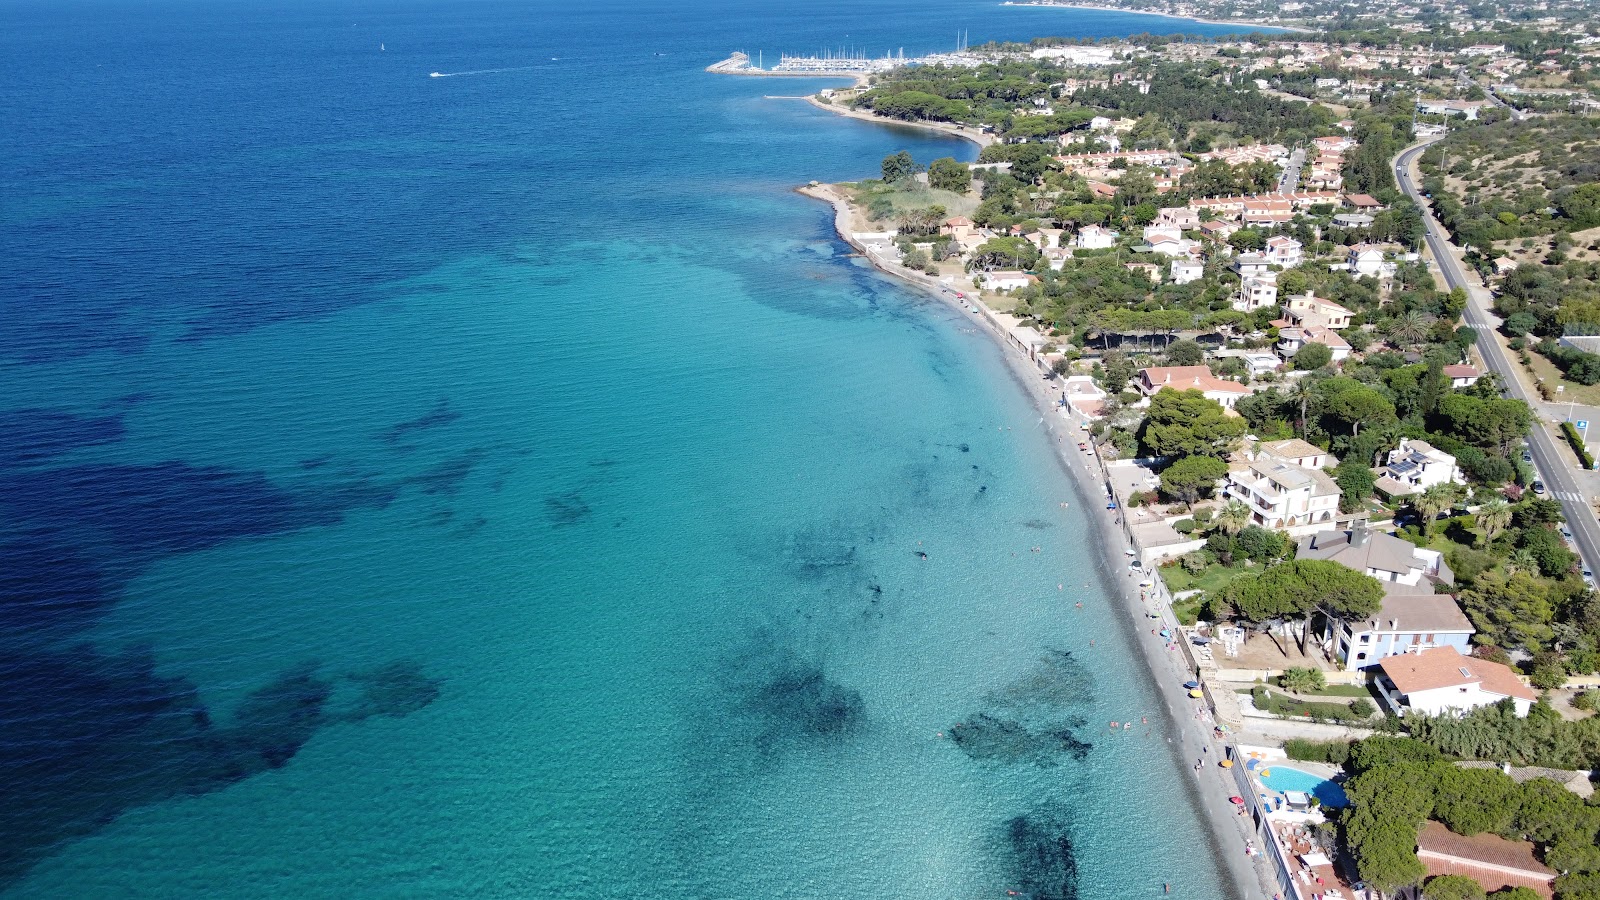 Foto av Spiaggia di Capitana med blå rent vatten yta